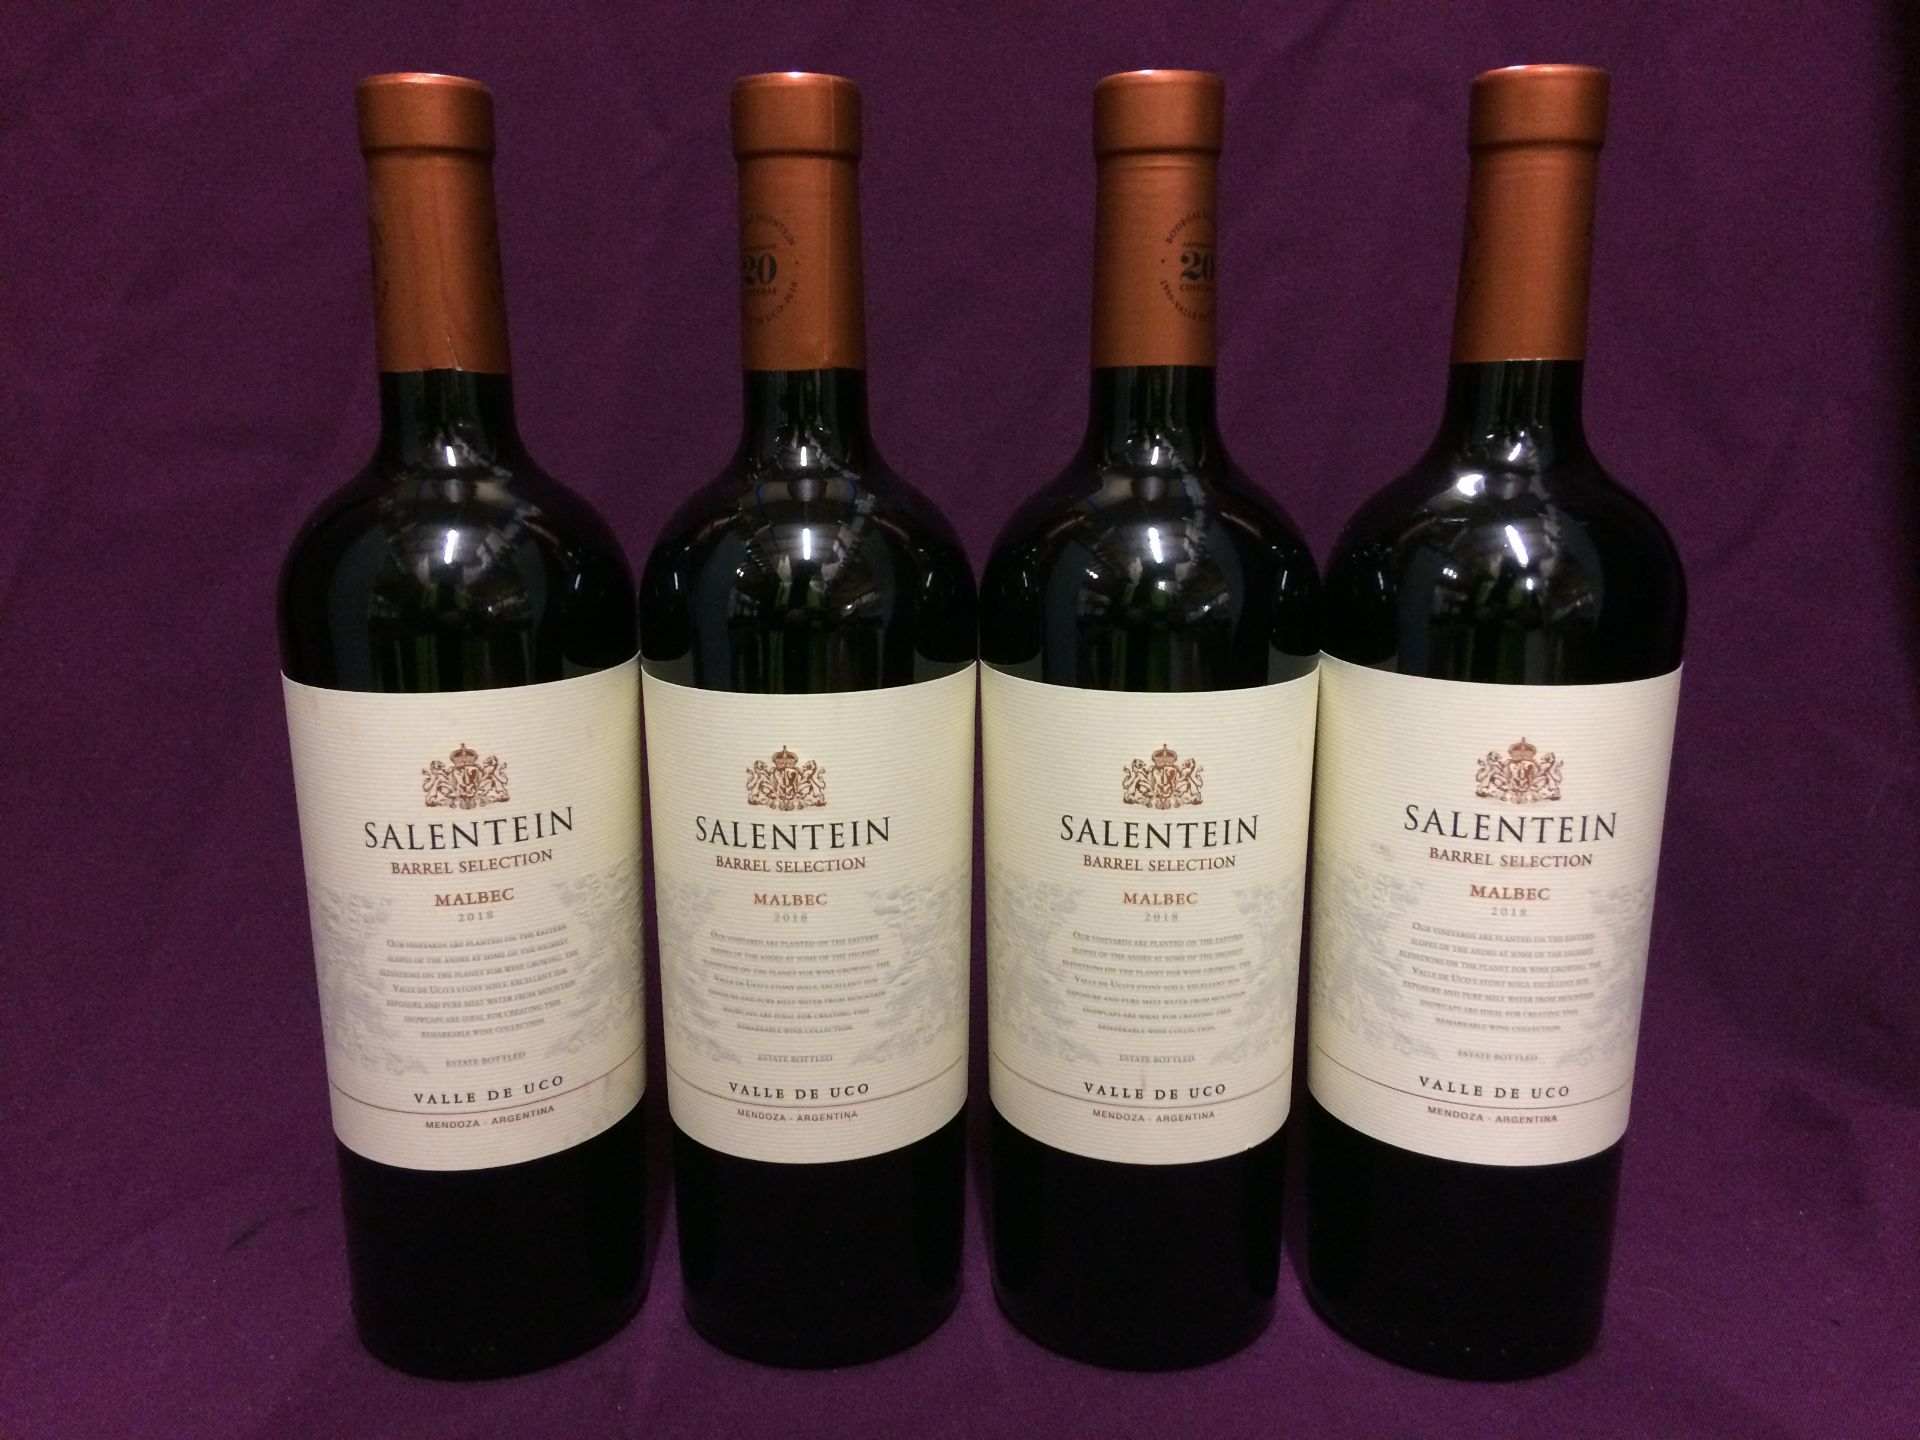 4 x 750ml bottles of Salentein Barrei Selection 2018 Malbec Valle De Uco Argentina